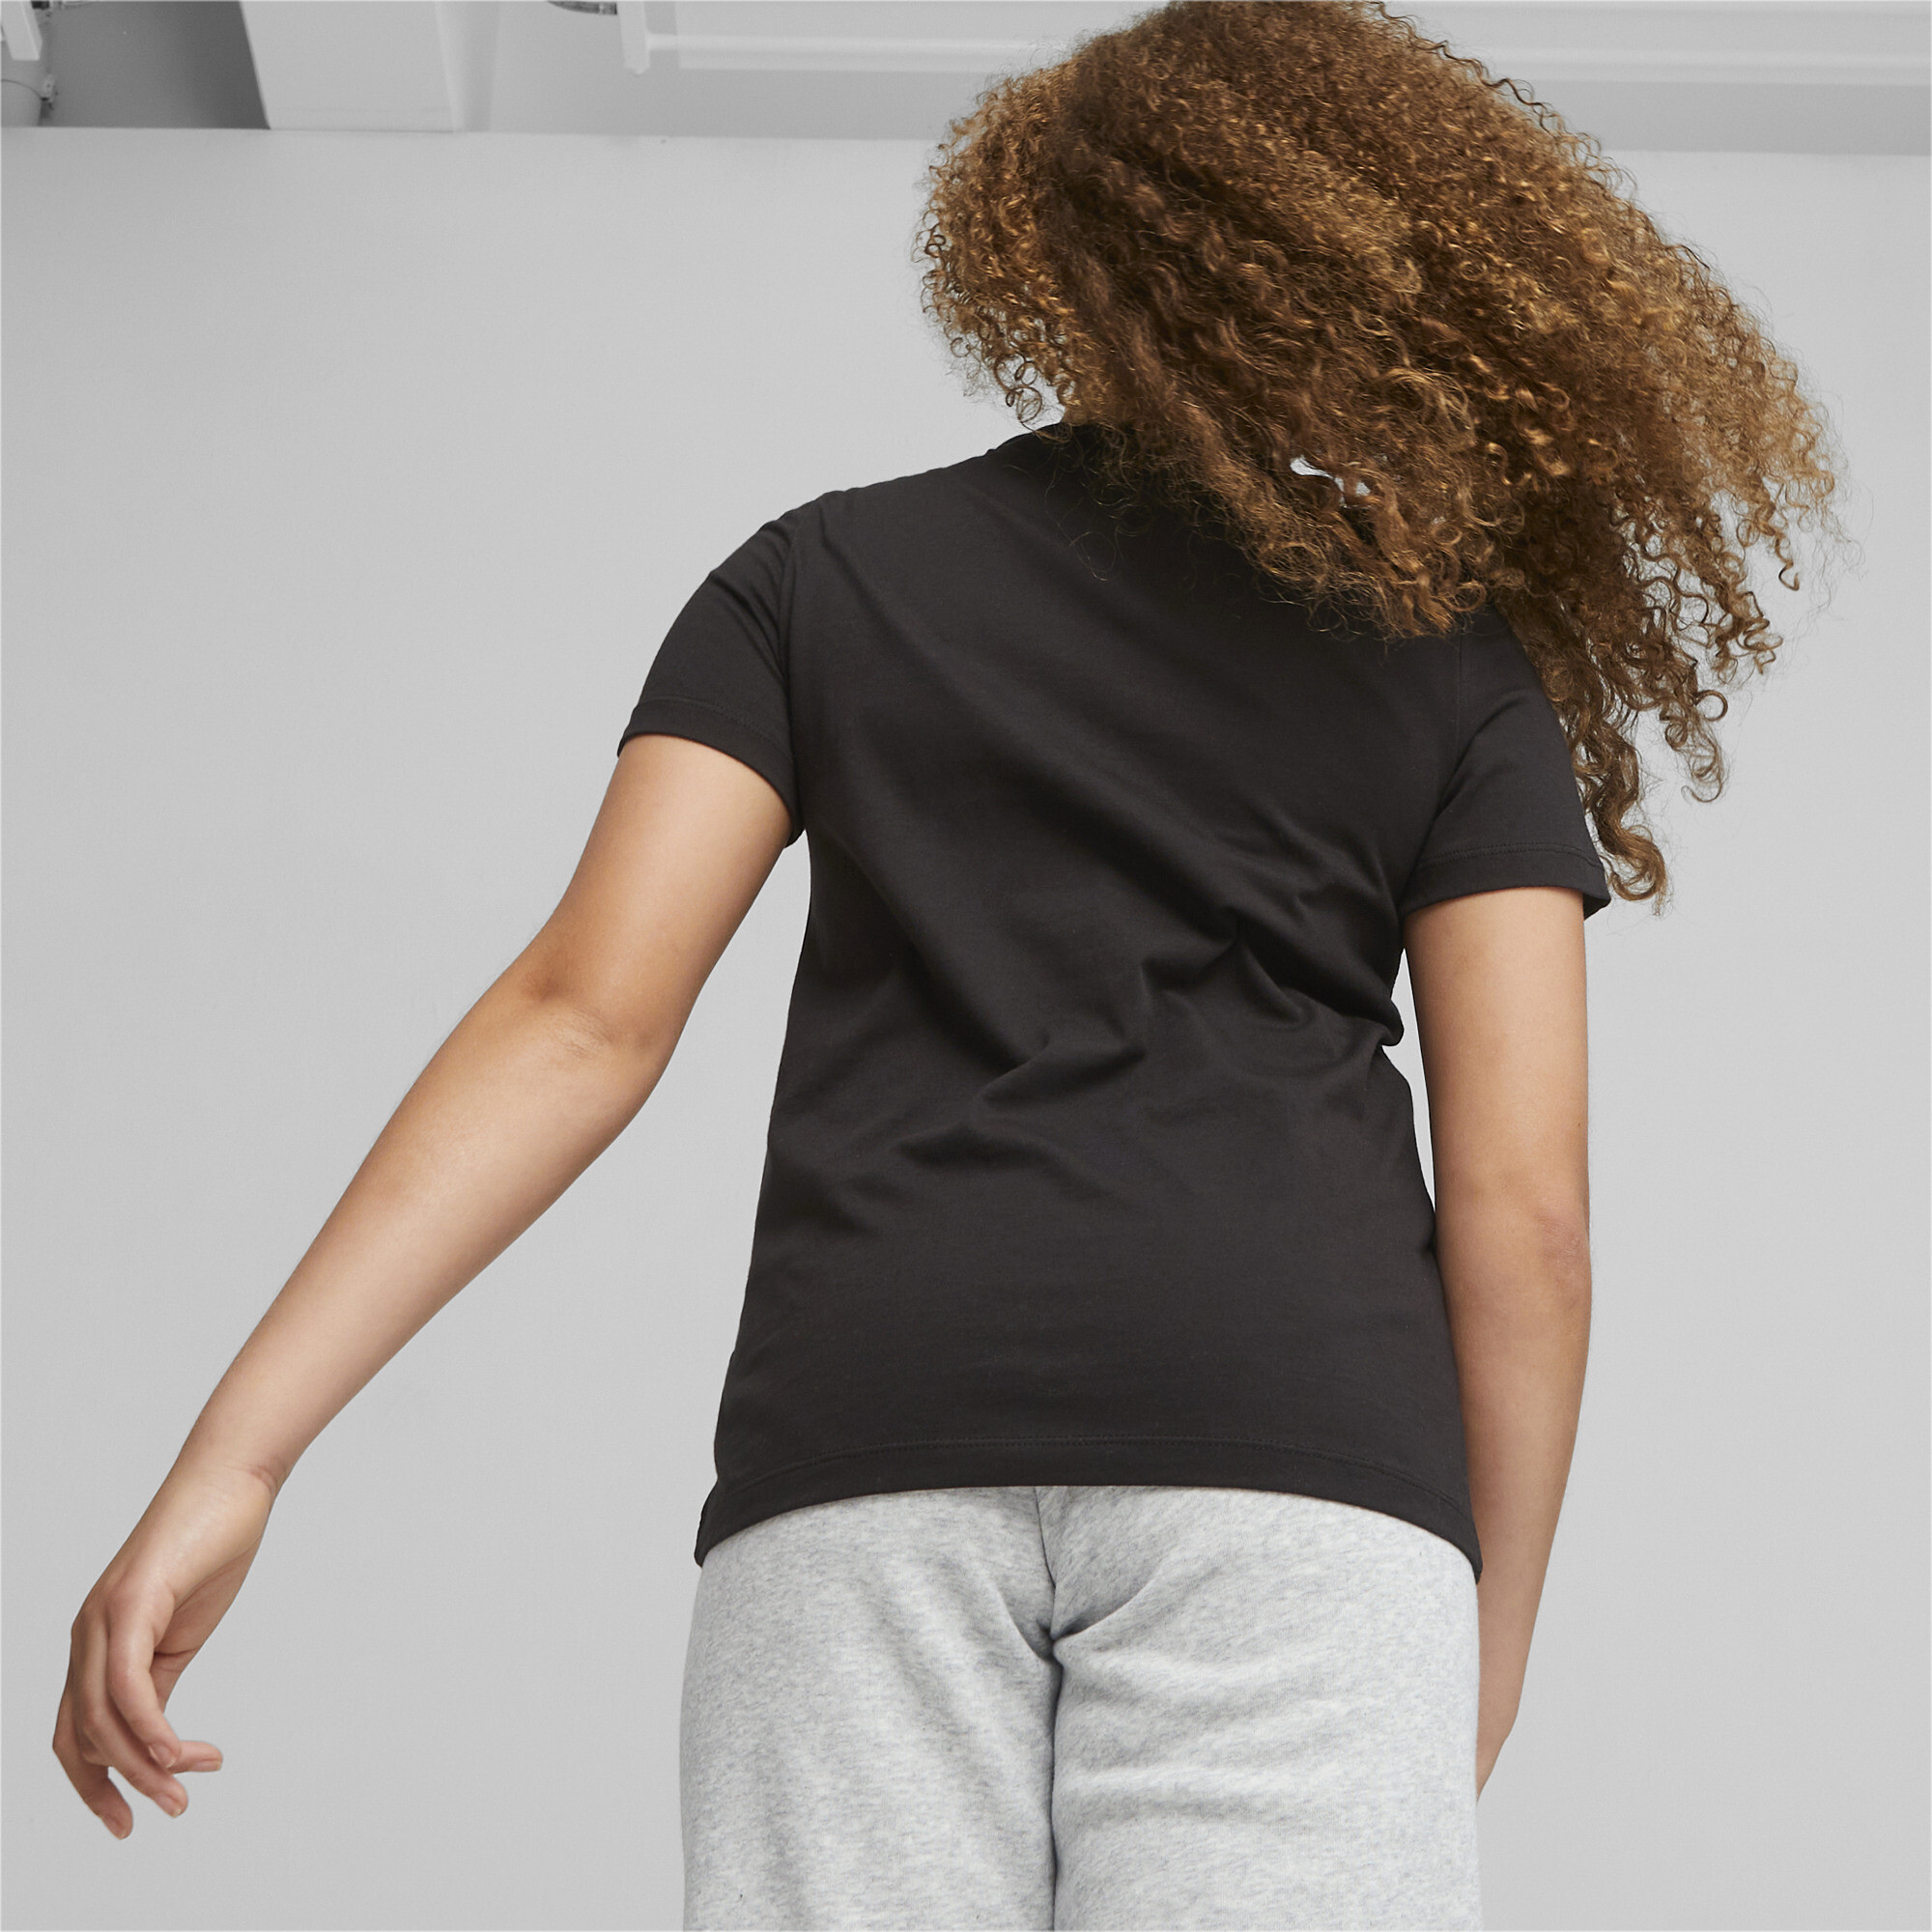 PUMA X SPONGEBOB SQUAREPANTS T-Shirt In Black, Size 7-8 Youth